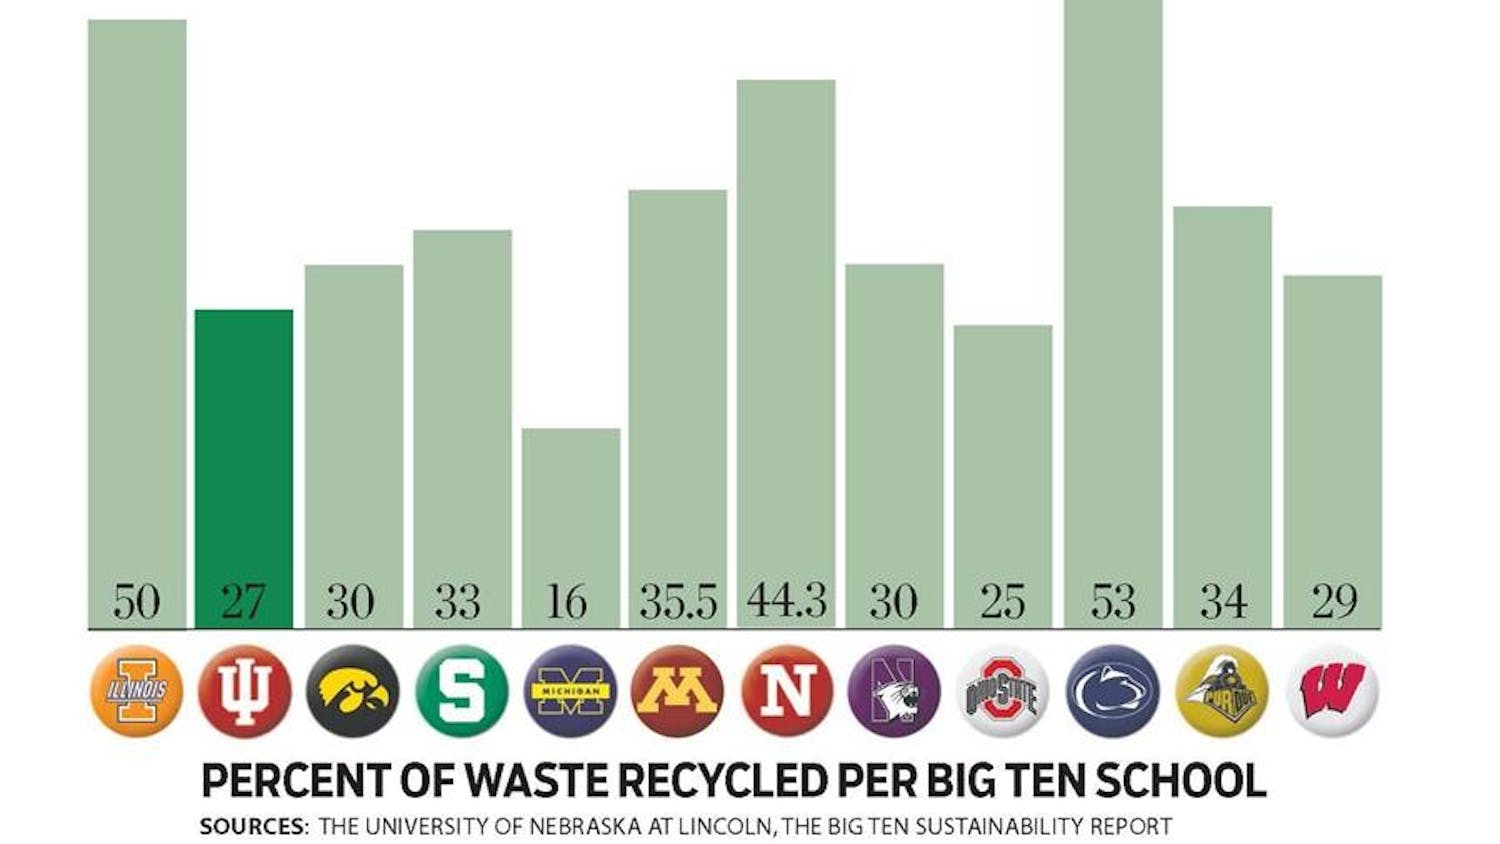 Percent of waste recycled per Big Ten school